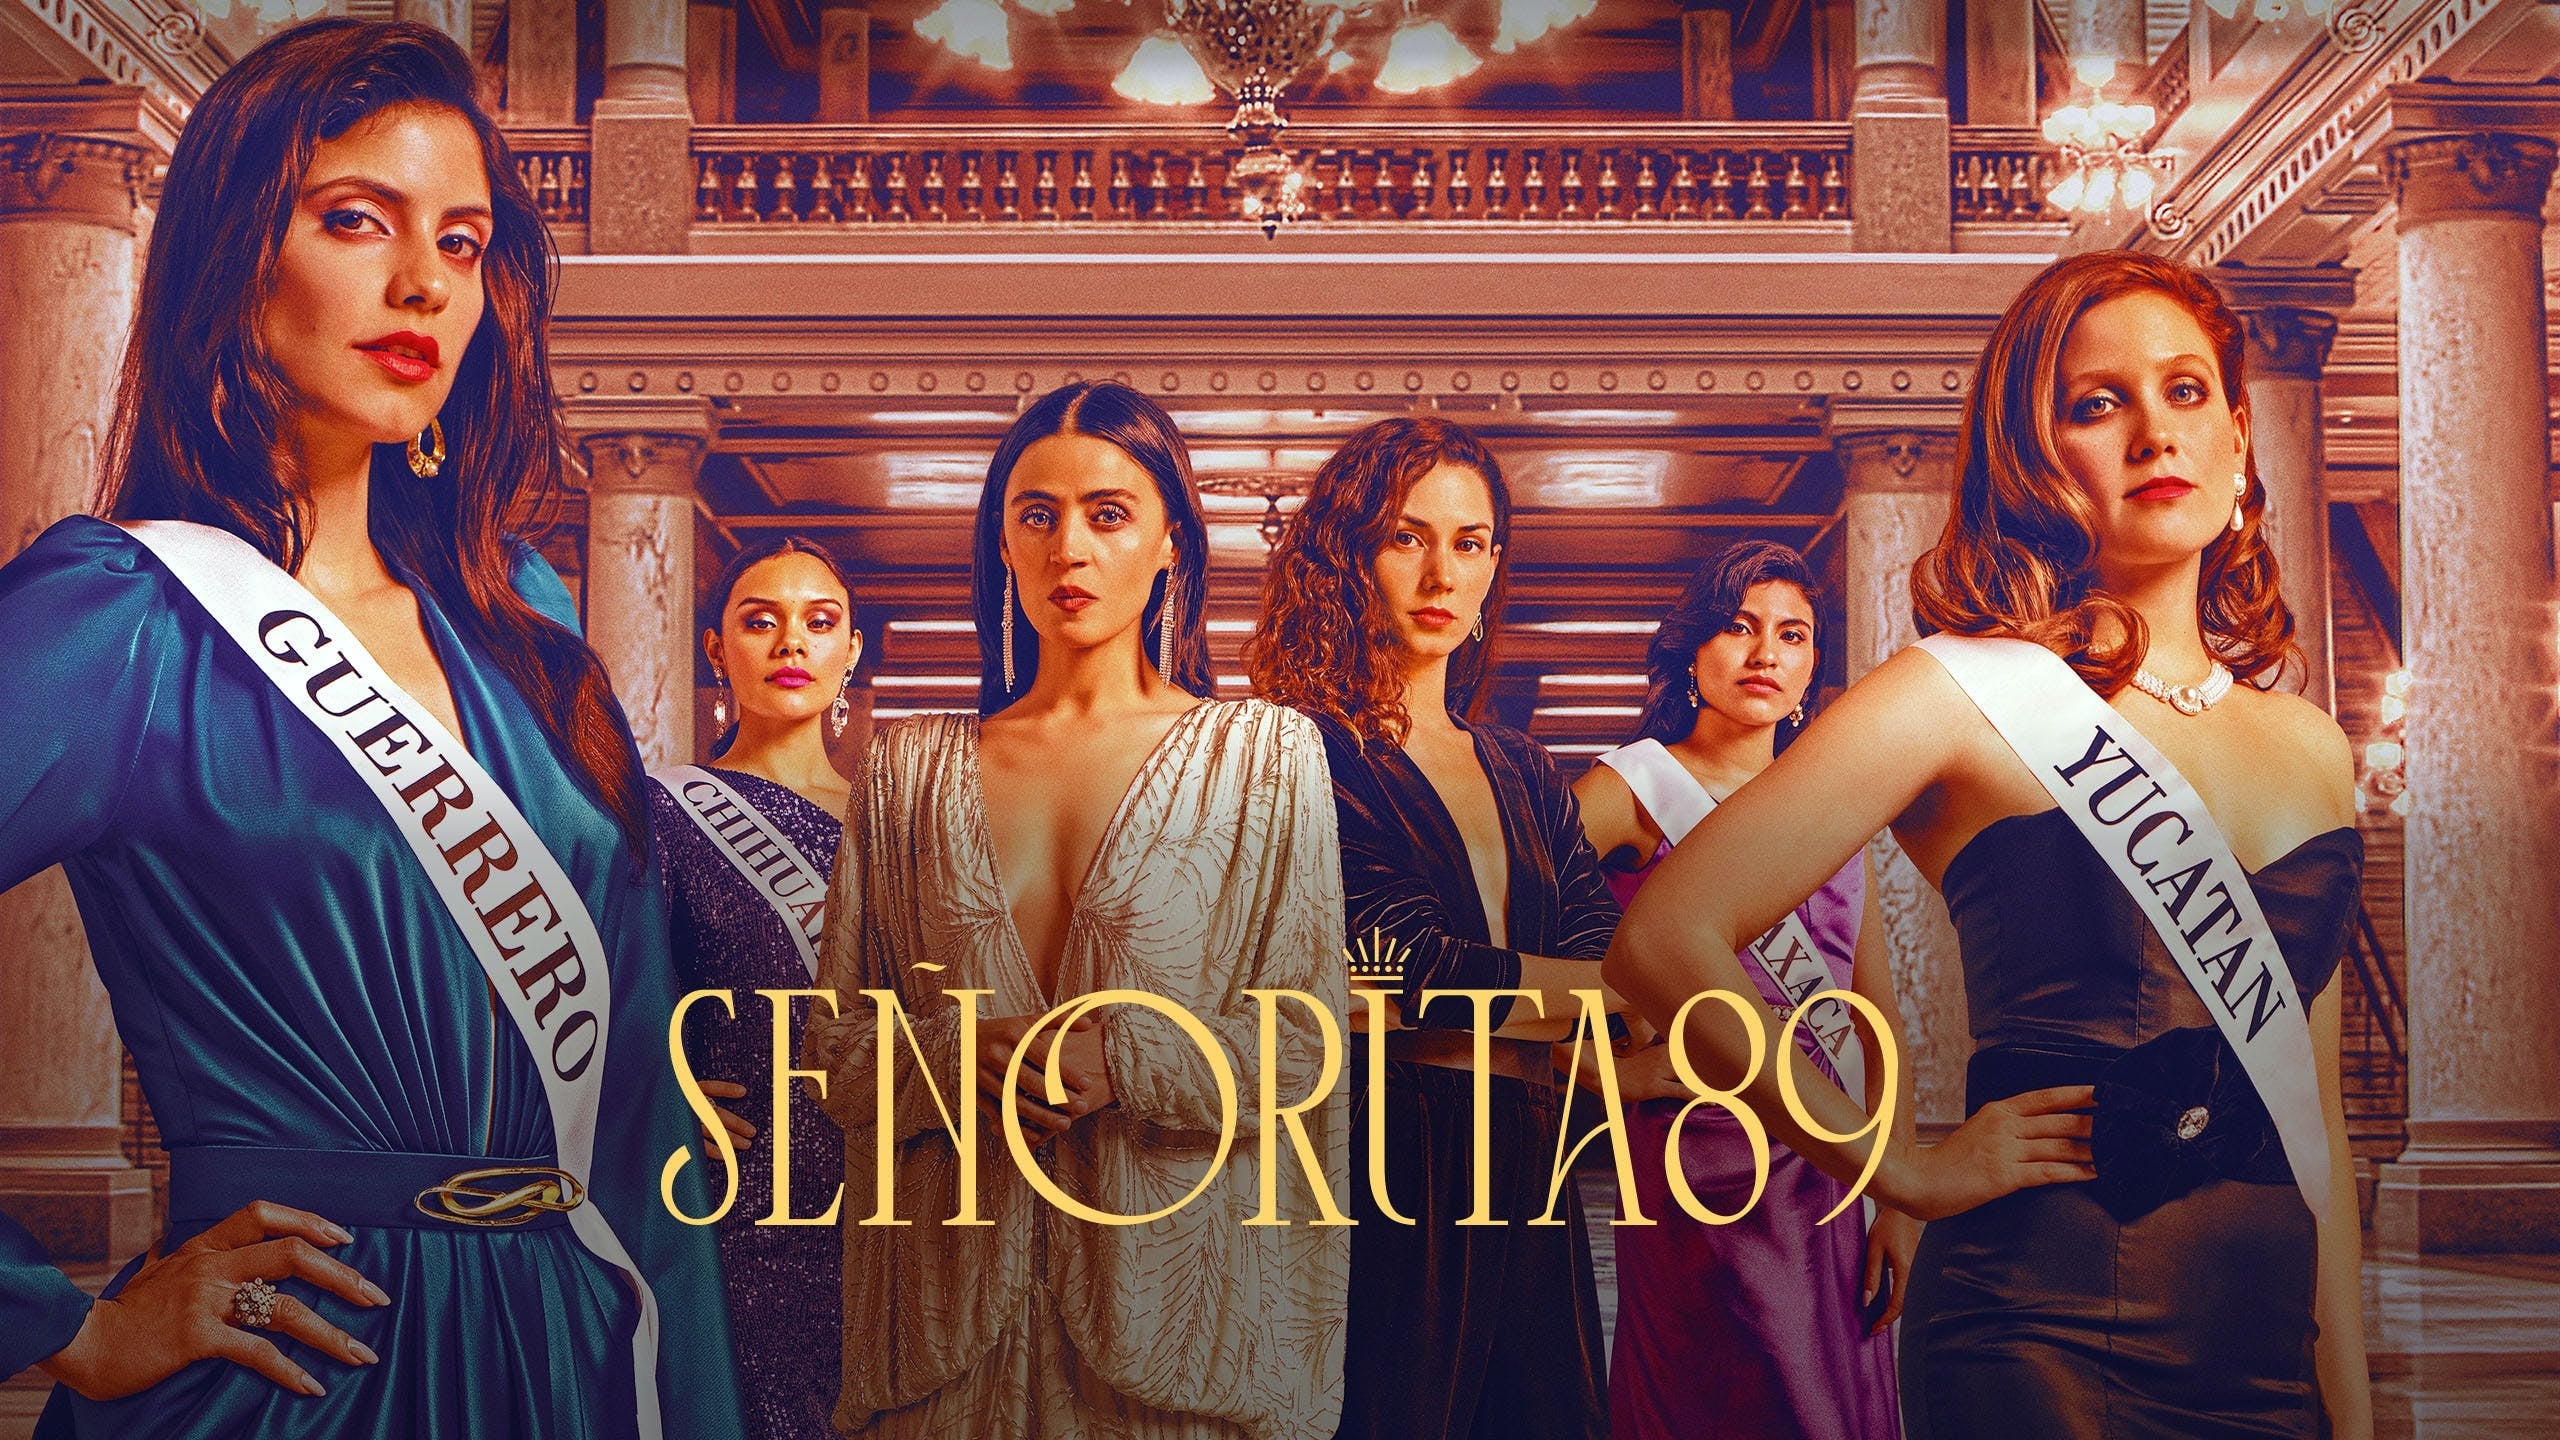 Señorita 89 - Season 2 - Episode 2